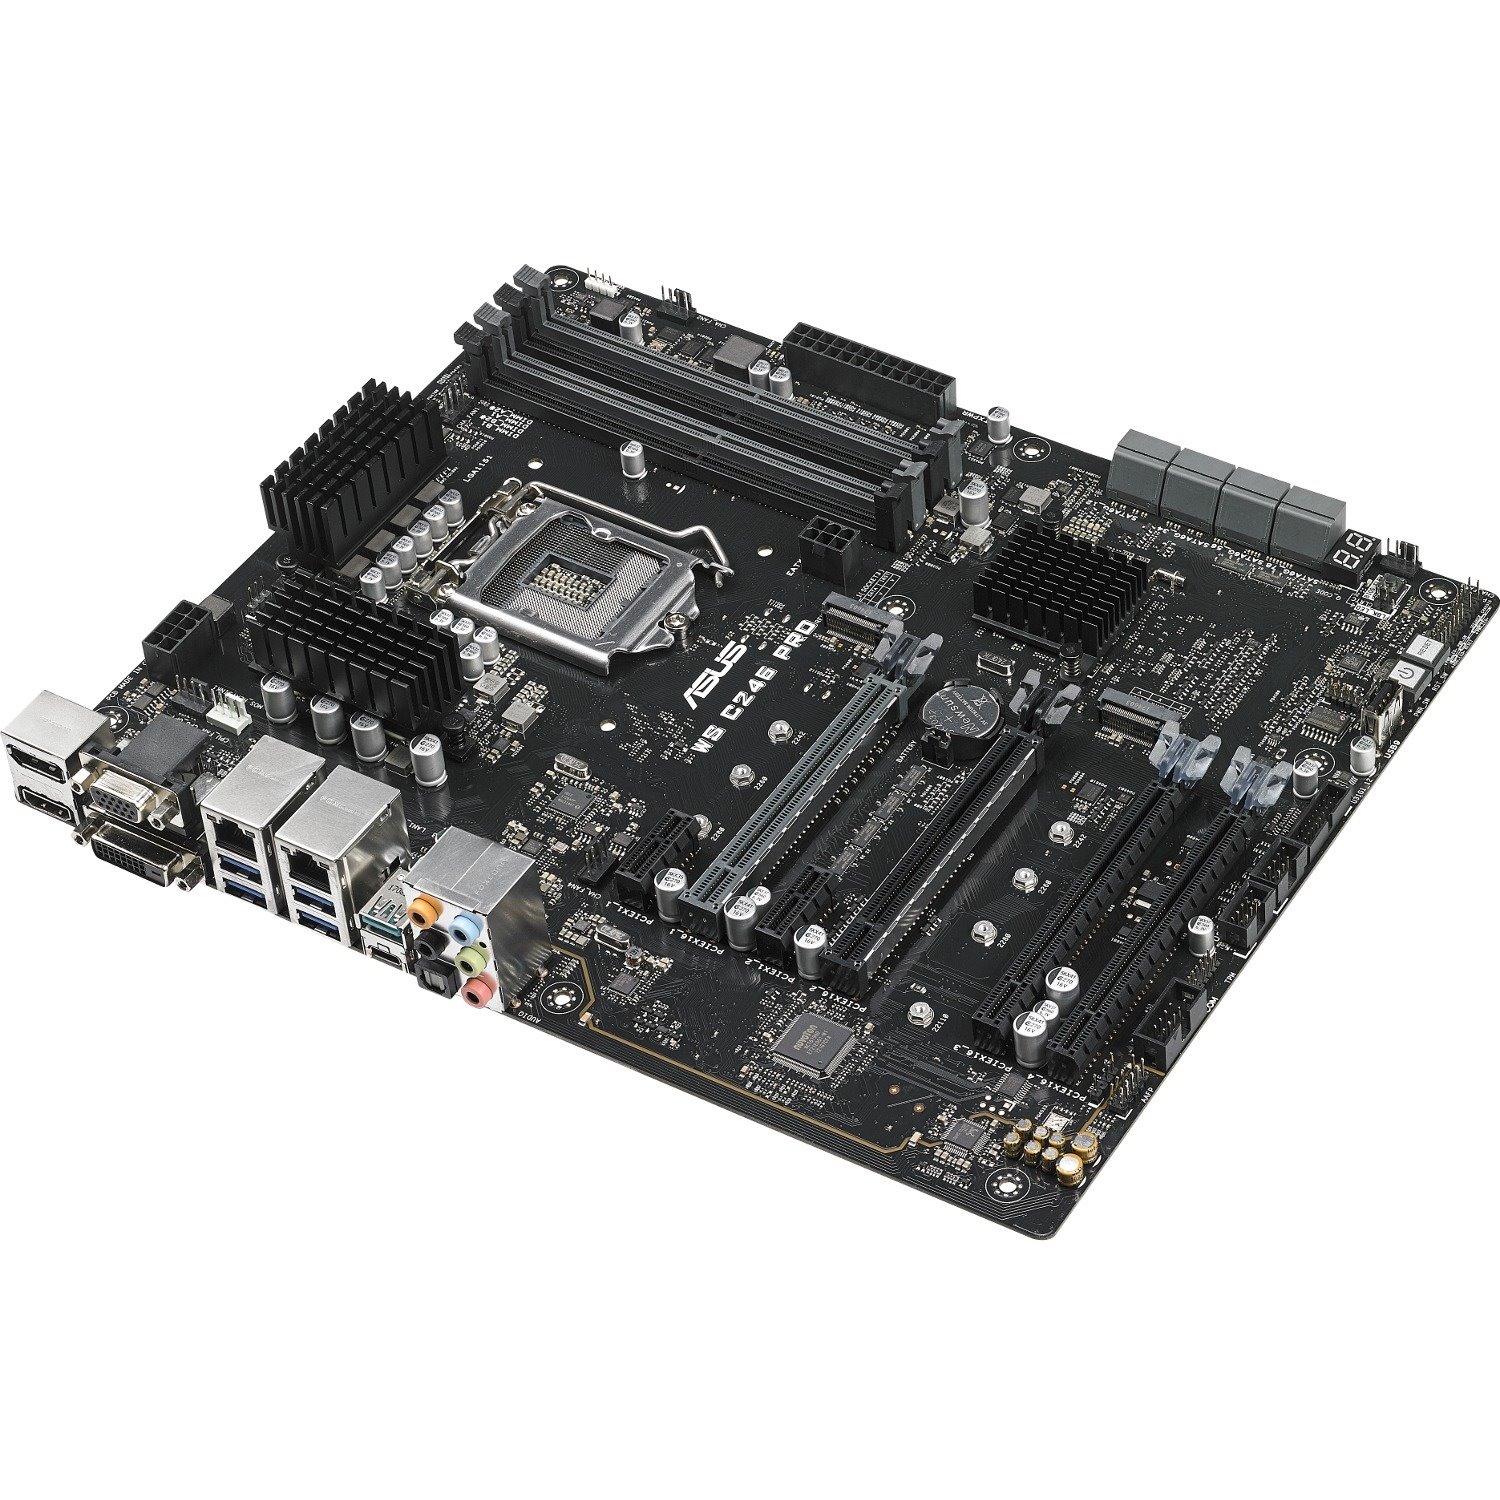 Asus WS C246 PRO Workstation Motherboard - Intel C246 Chipset - Socket H4 LGA-1151 - Intel Optane Memory Ready - ATX